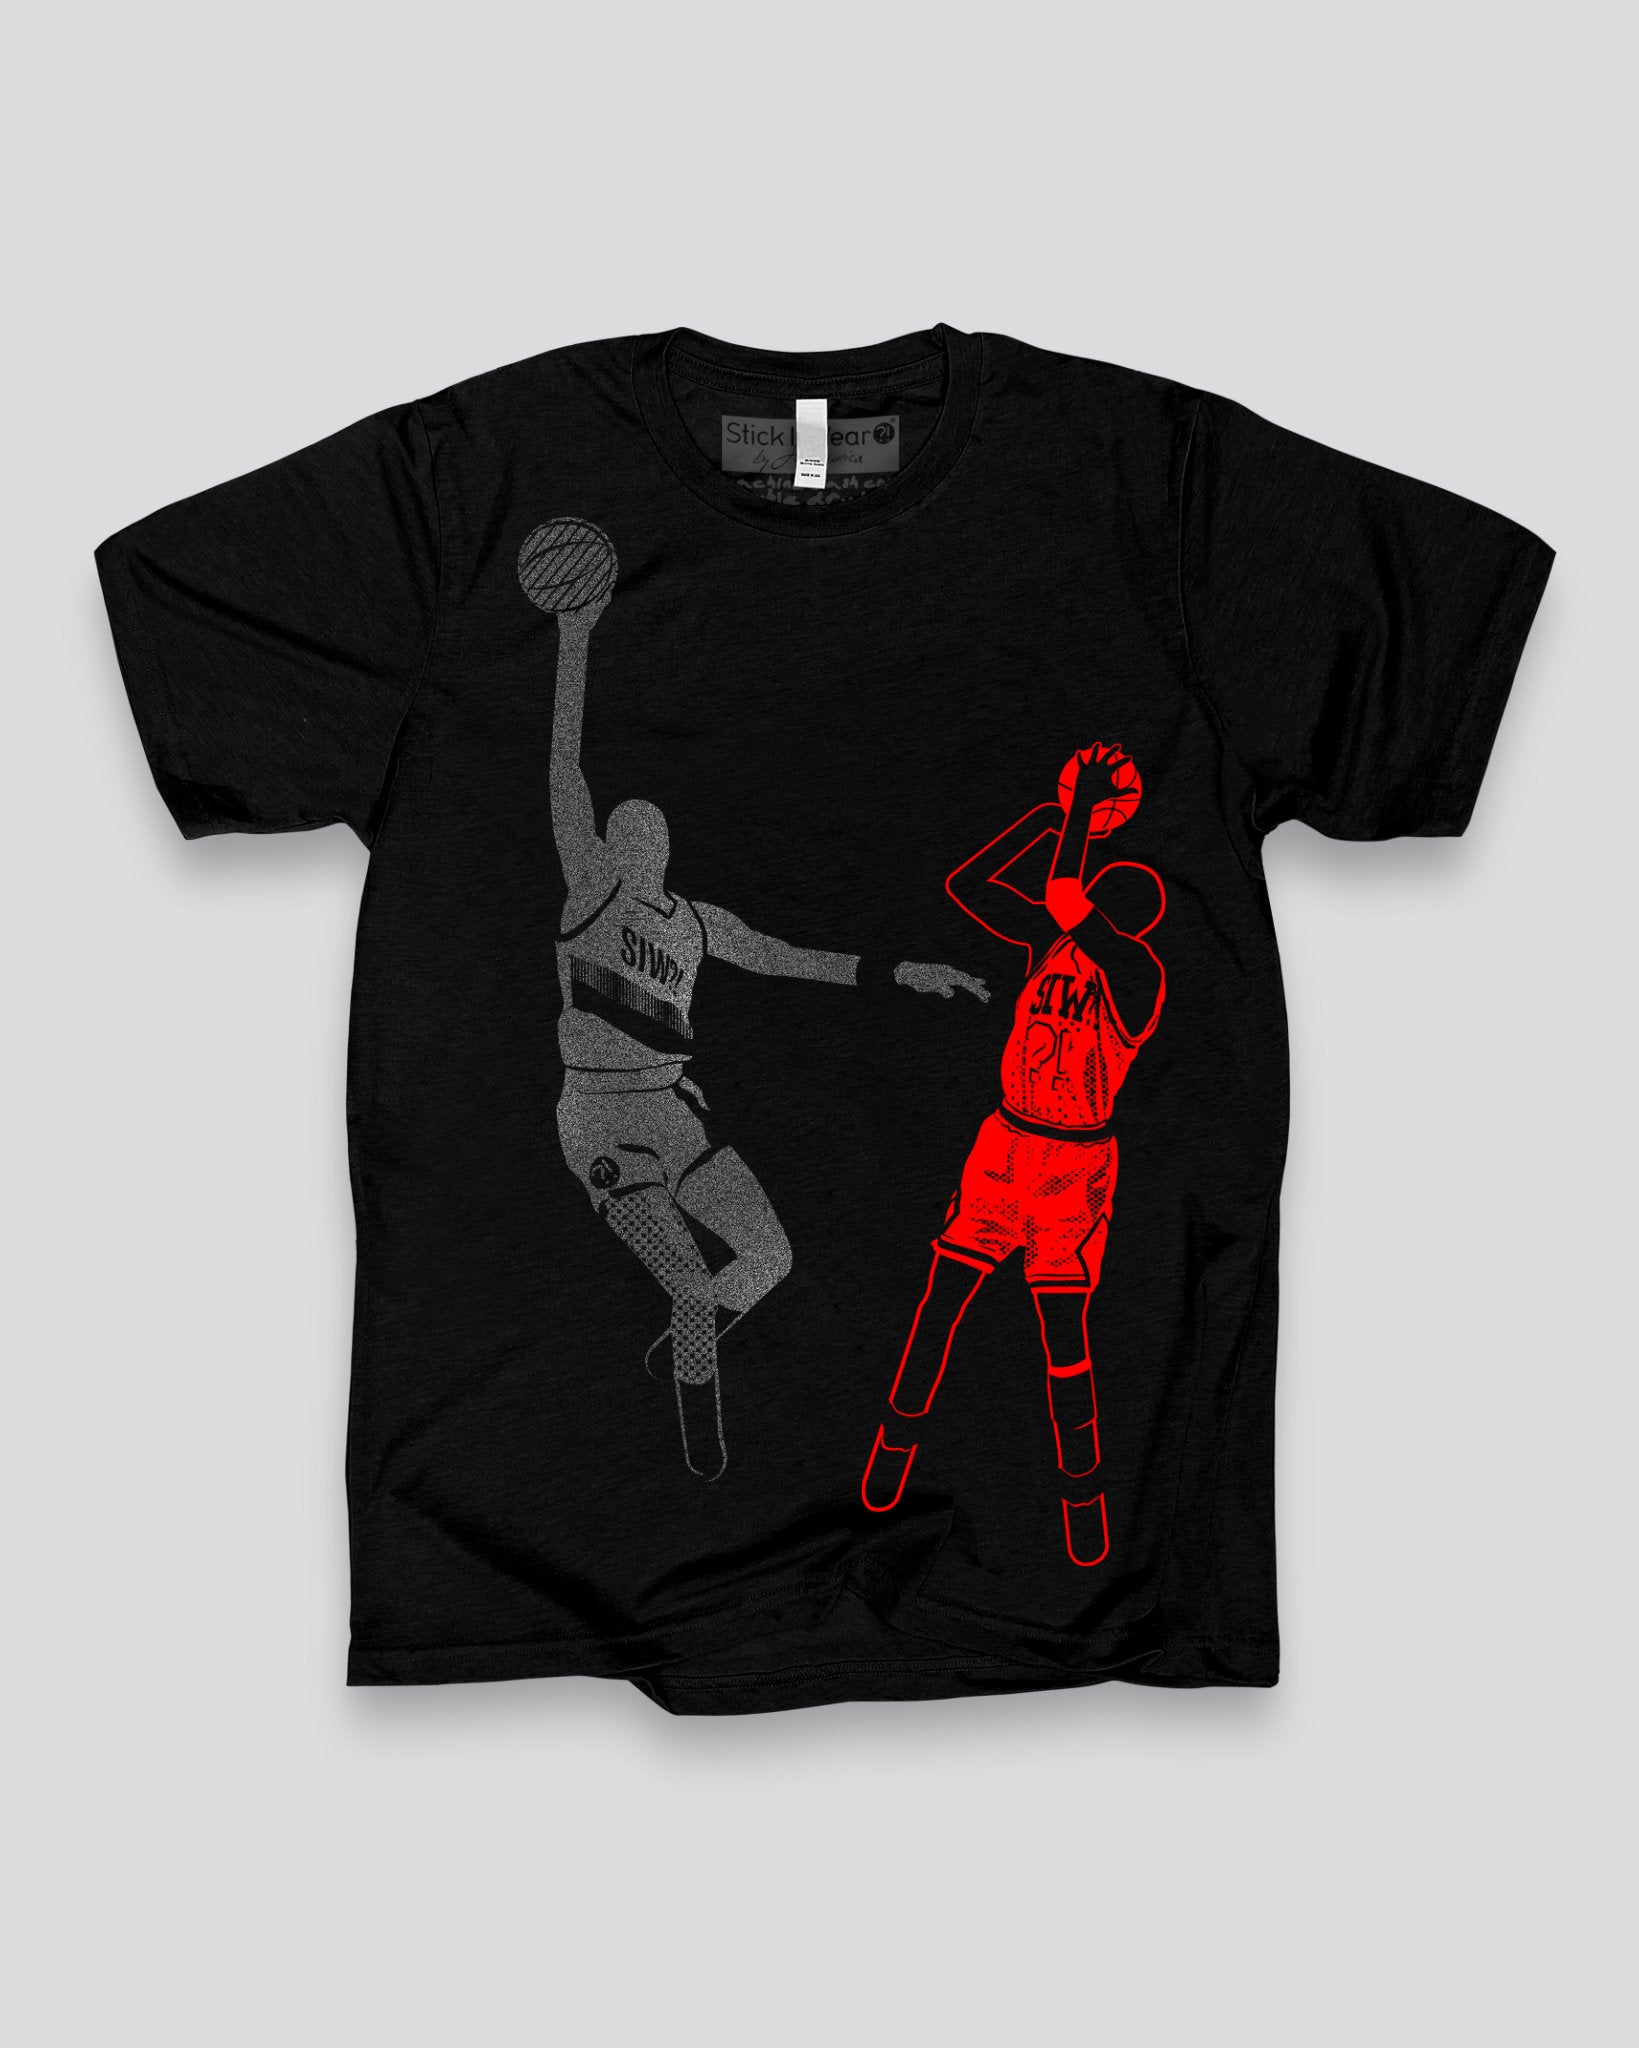 Basketball Sports Fashion Apparel It Stick | Wear